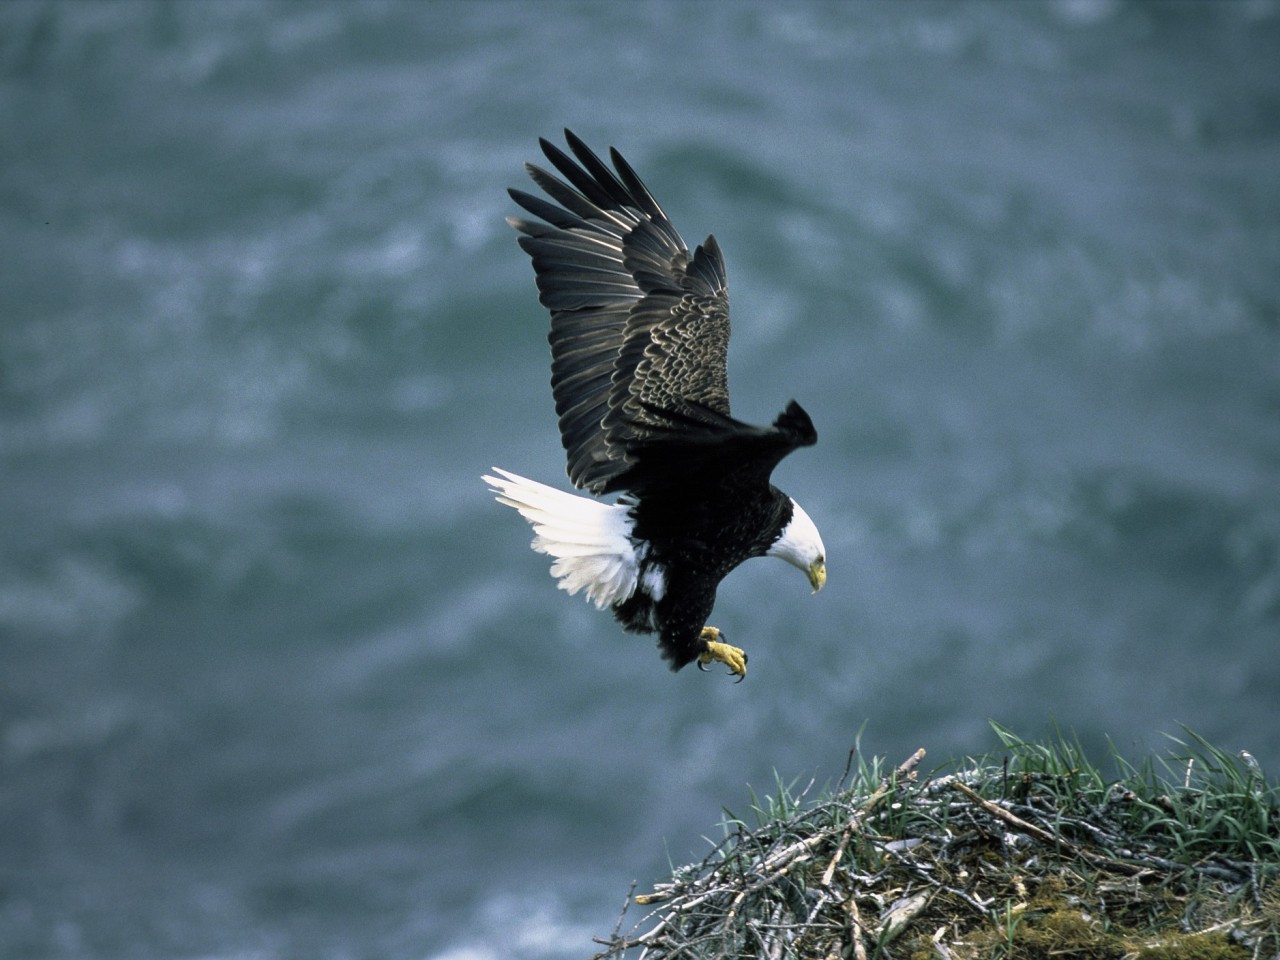 Wallpaper Eagle flying bird mountain animal images for desktop section  животные  download